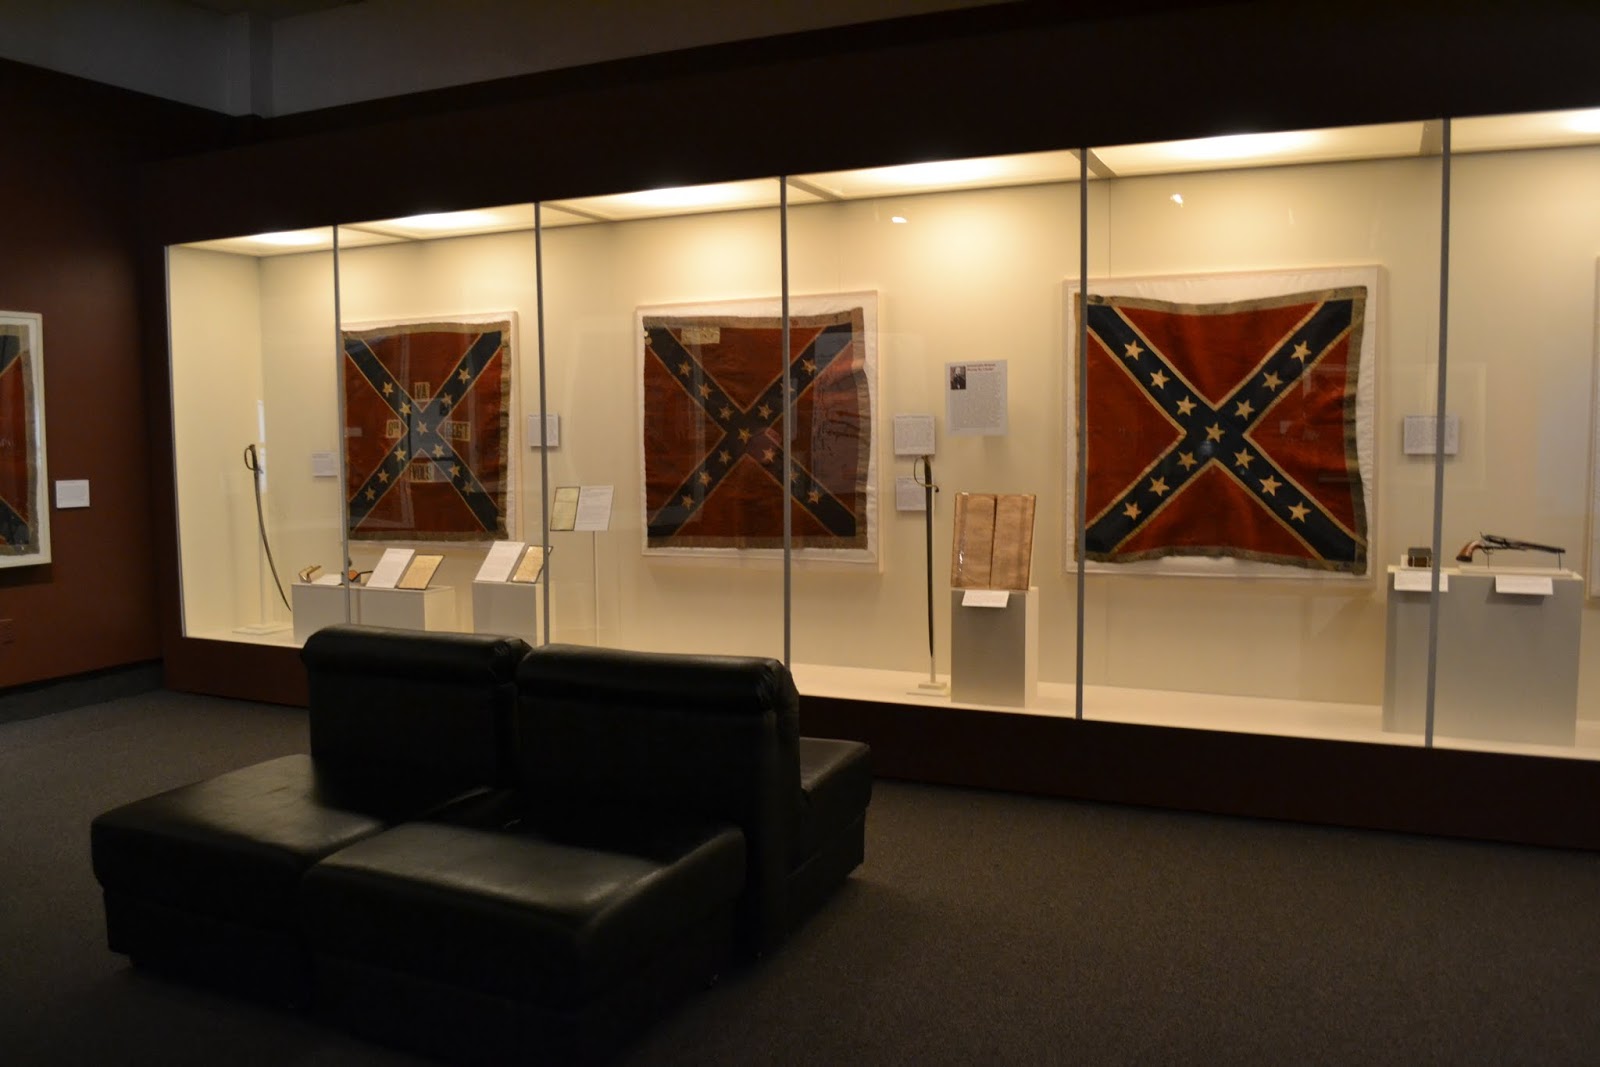 Музей Конфедерации, Ричмонд, Вирджиния (American Civil War Museum, Richmond, Virginia)